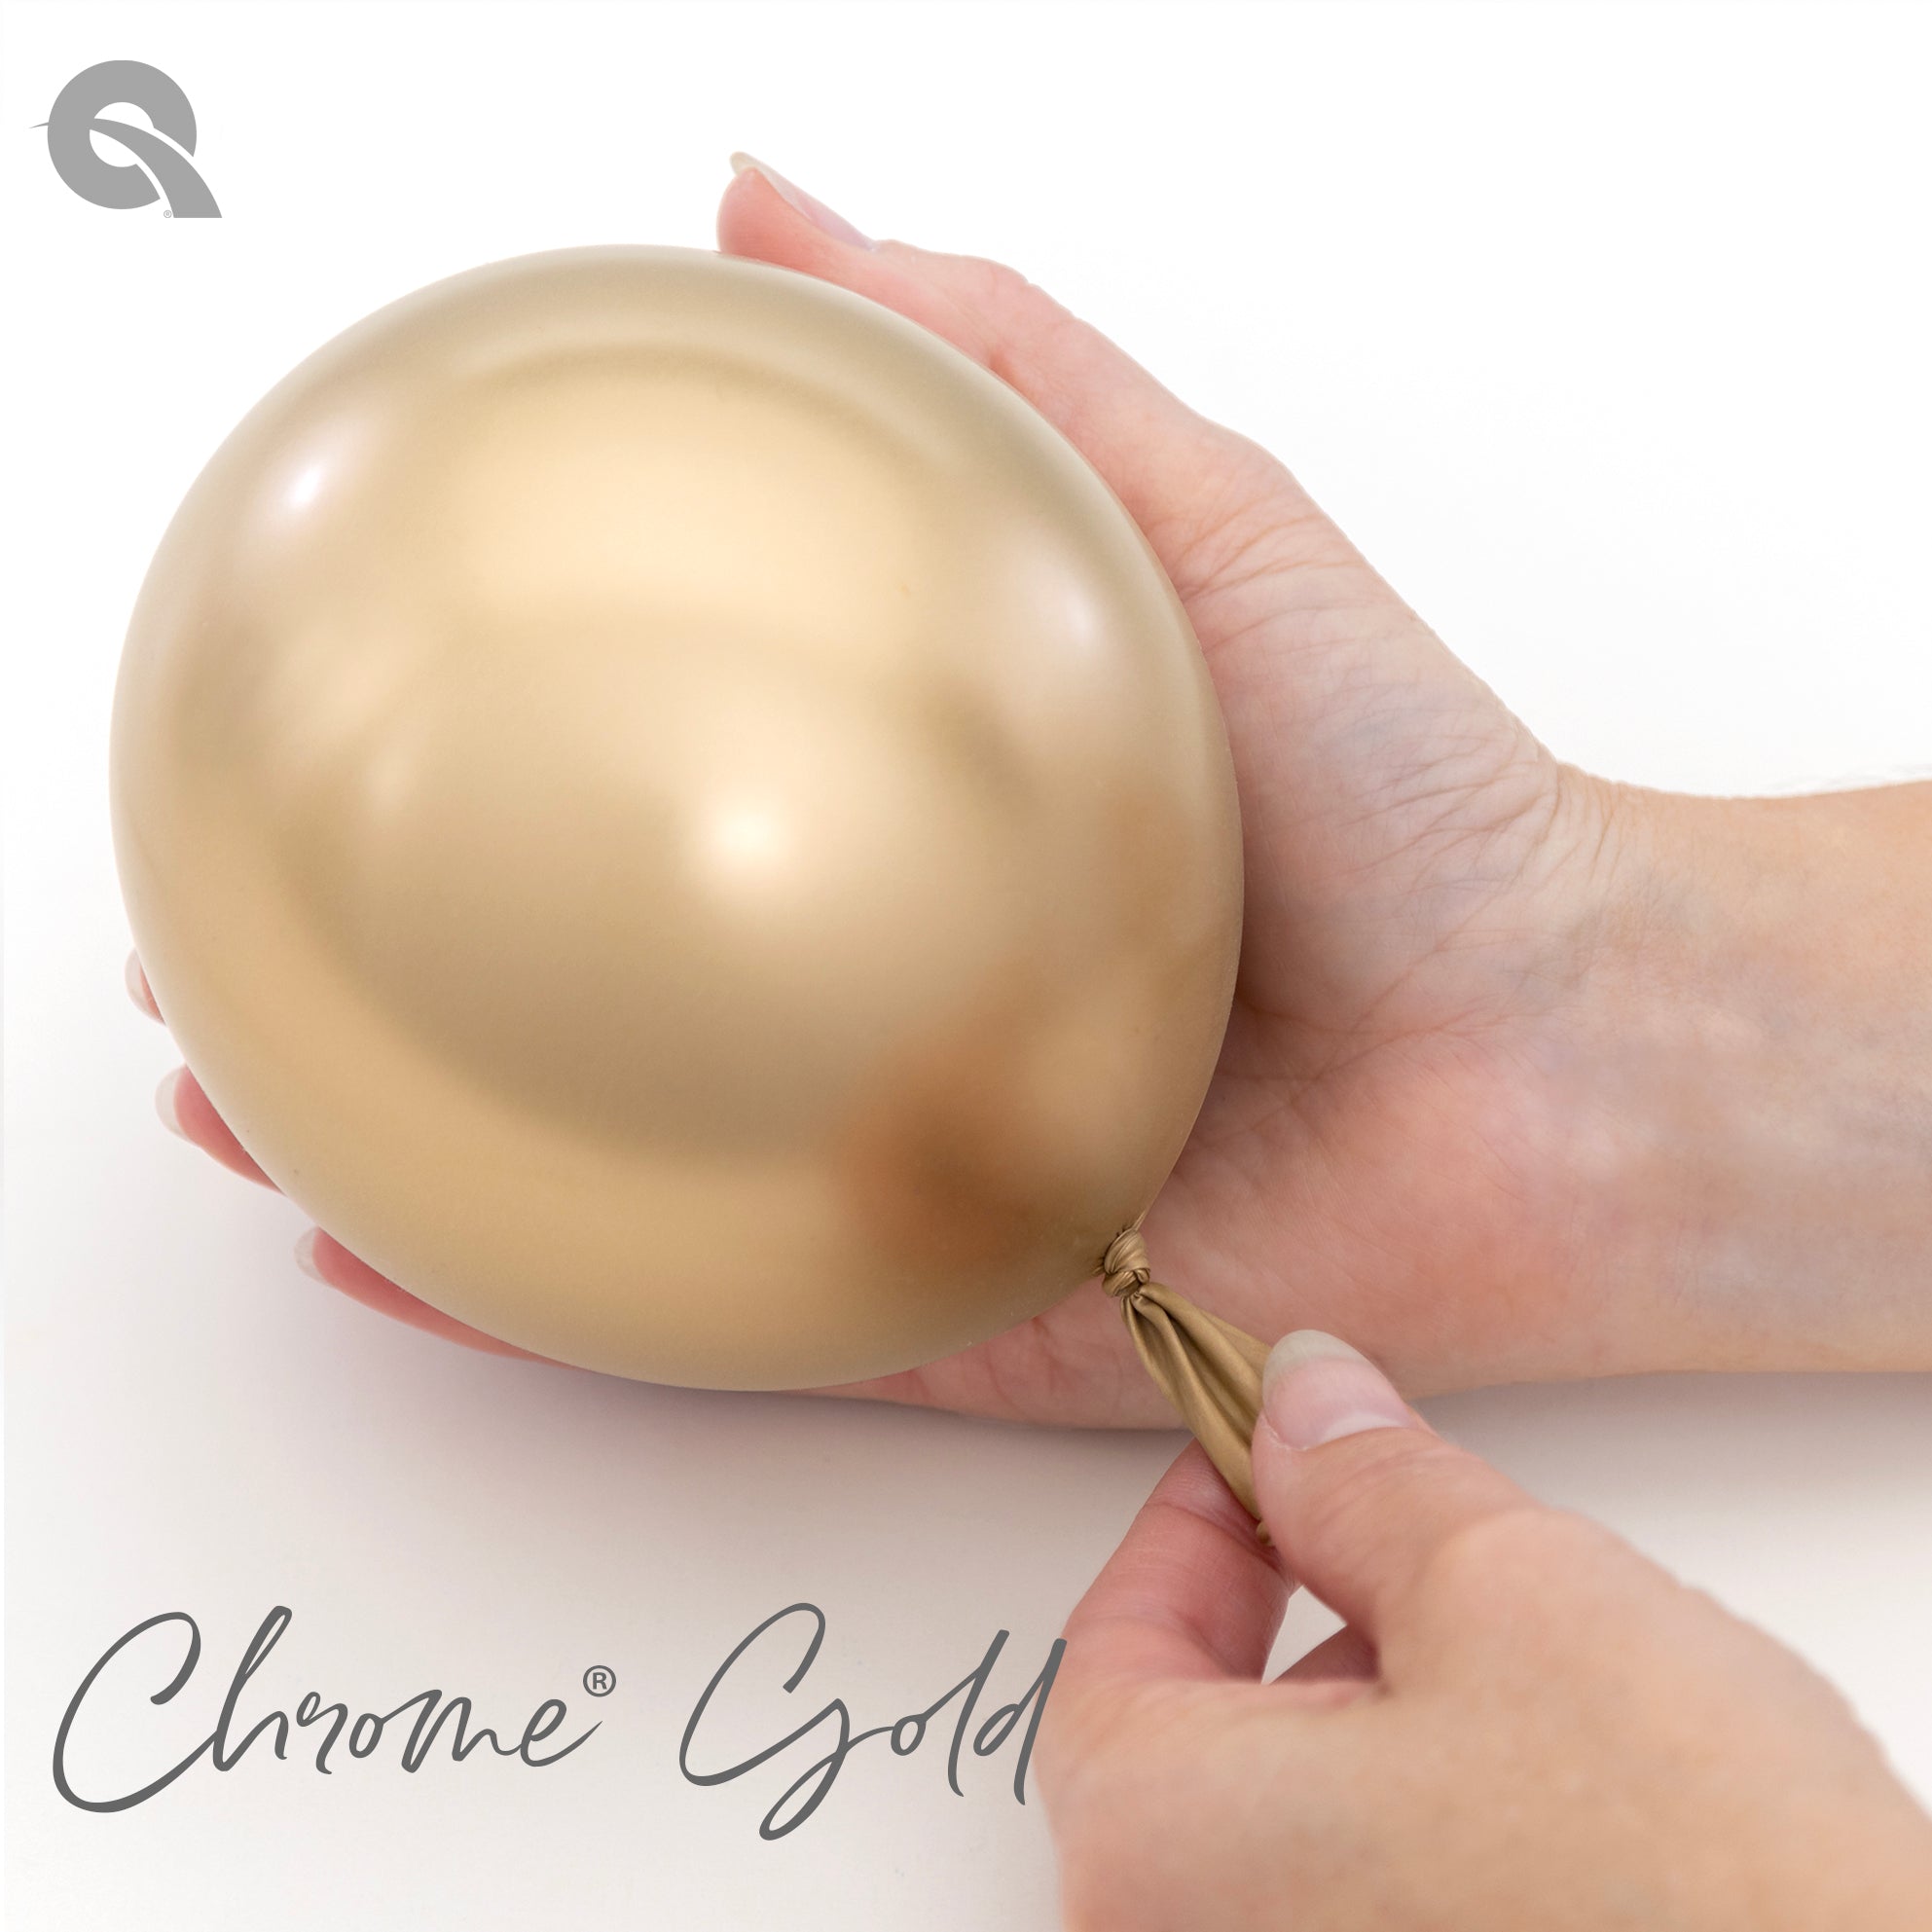 11" Qualatex Chrome Gold Latex Balloons | 100 Count